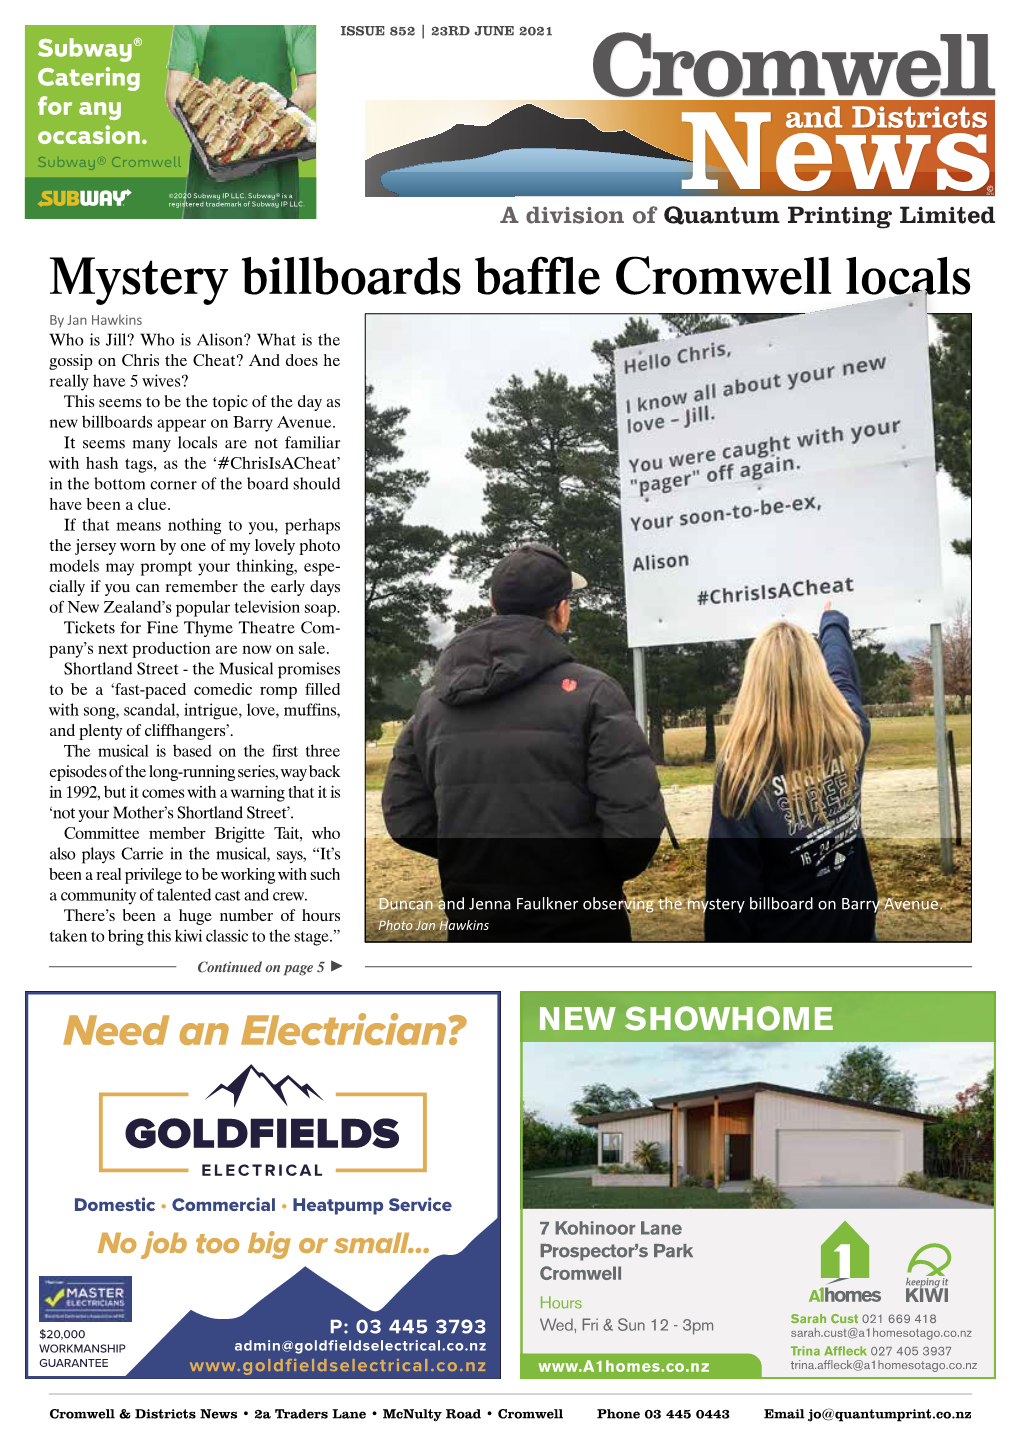 Mystery Billboards Baffle Cromwell Locals